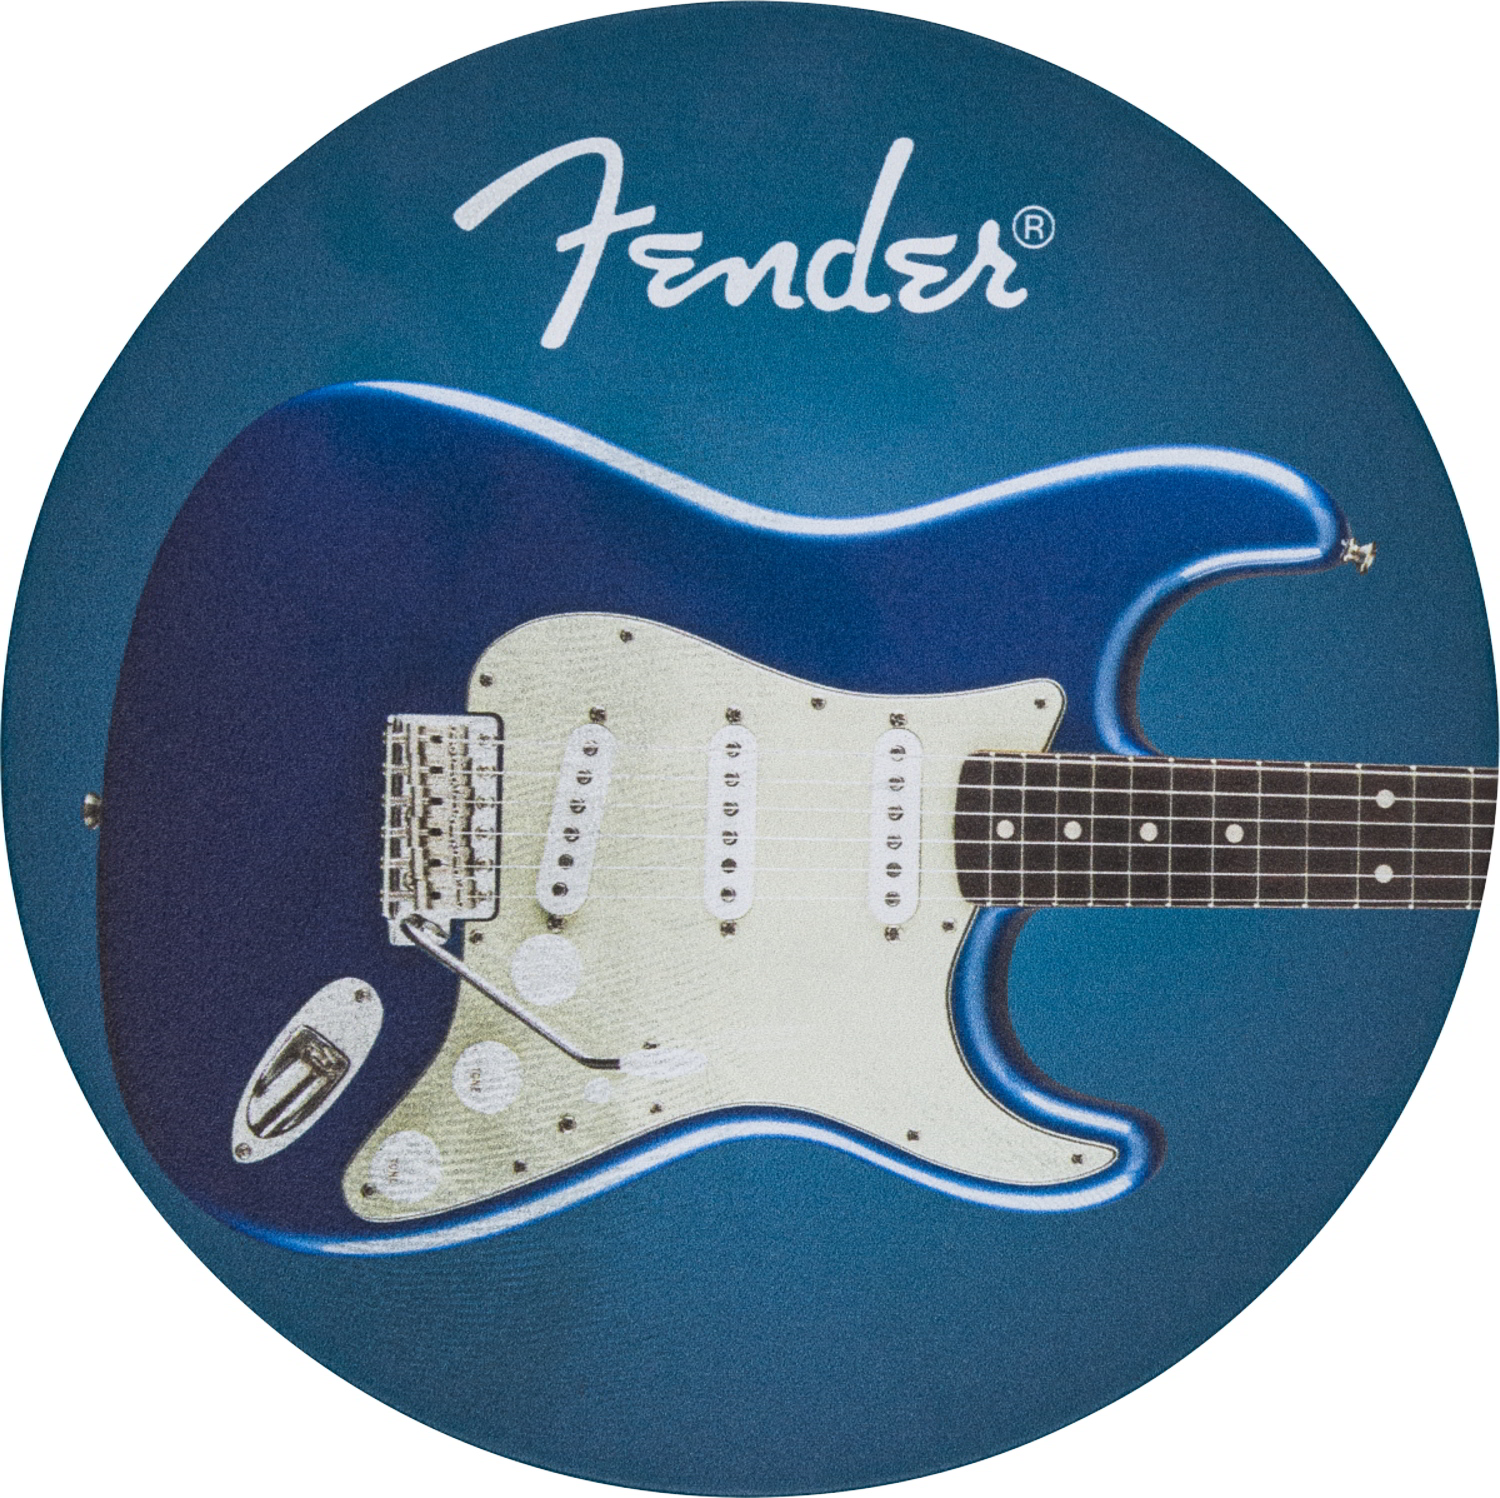 Fender™ Guitars Coasters, 4-Pack, Multi-Color Leather追加画像